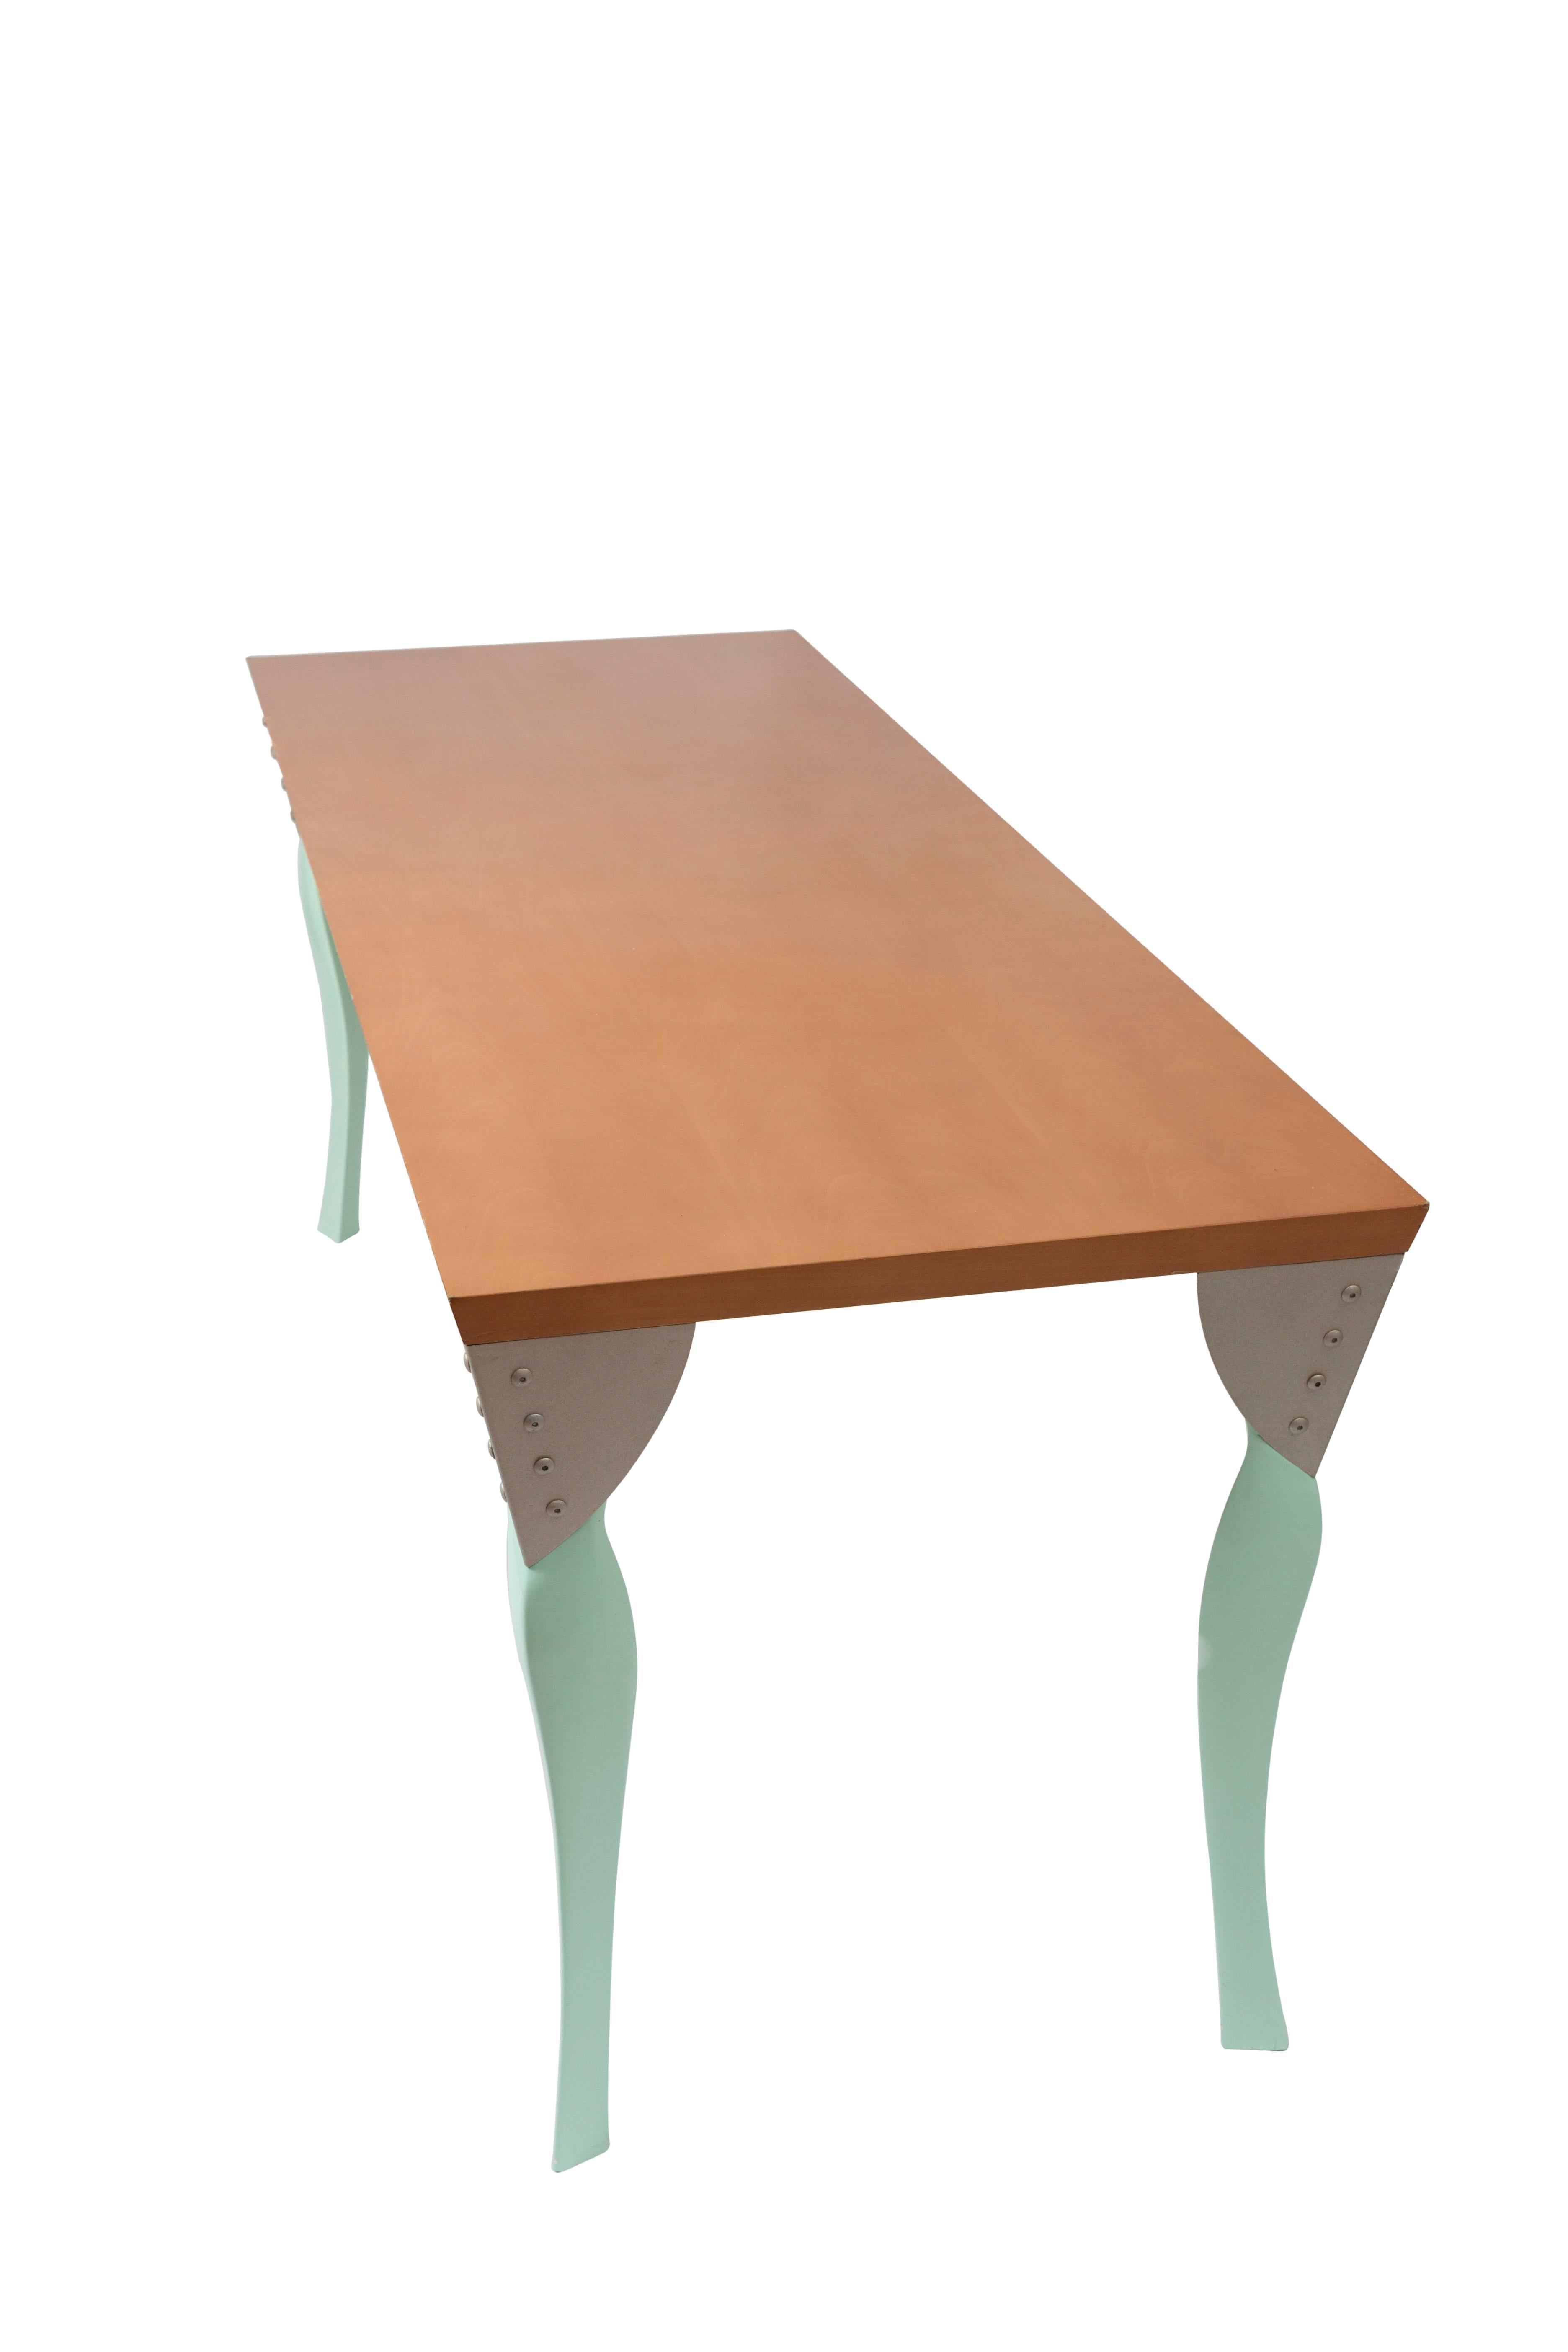 Post-Modern Dining Table in Postmodern Style designed by Borek Sipek for Scarabas